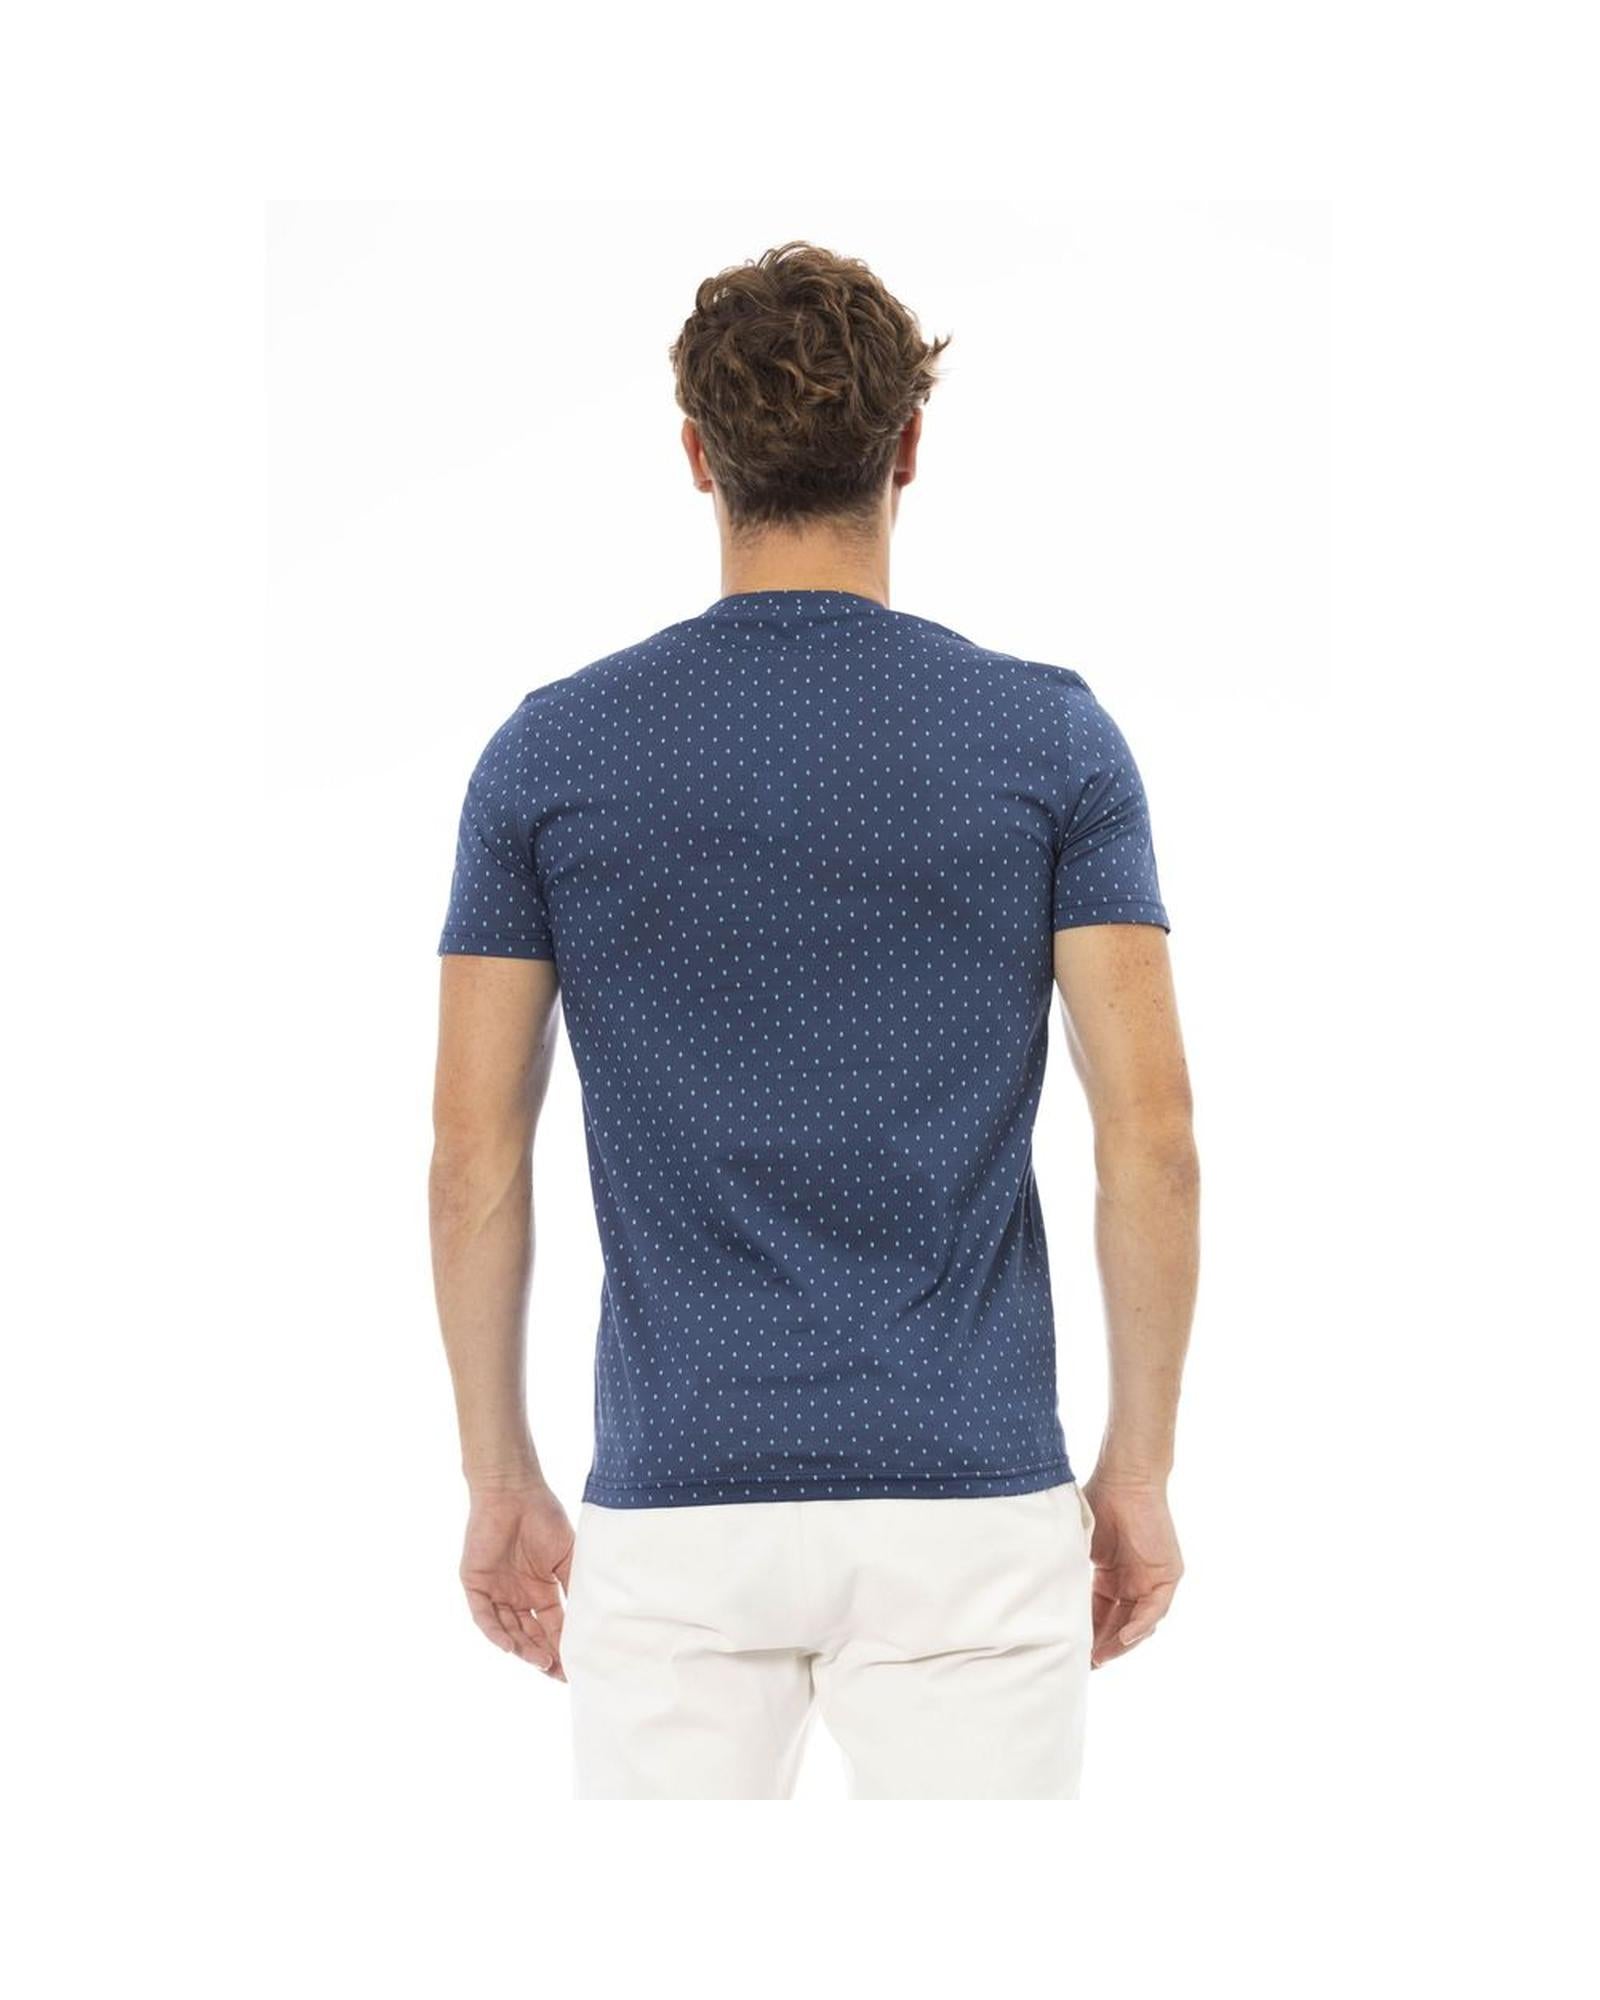 Skyline Sophistication Baldinini Blue/Grey Tee Shirt - L